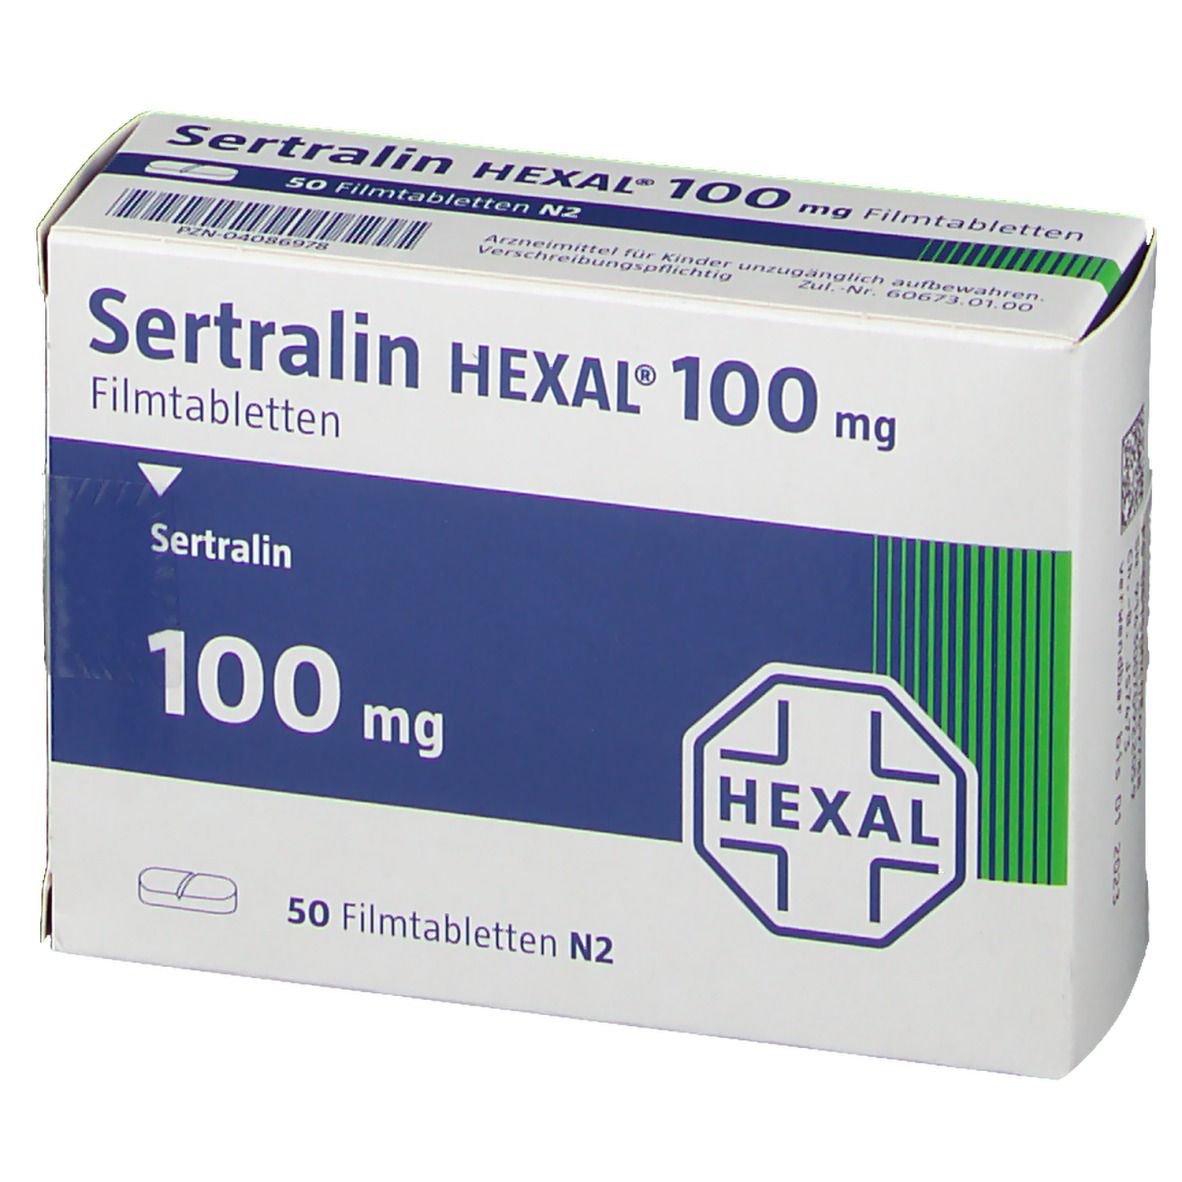 Sertralin HEXAL® 100 mg